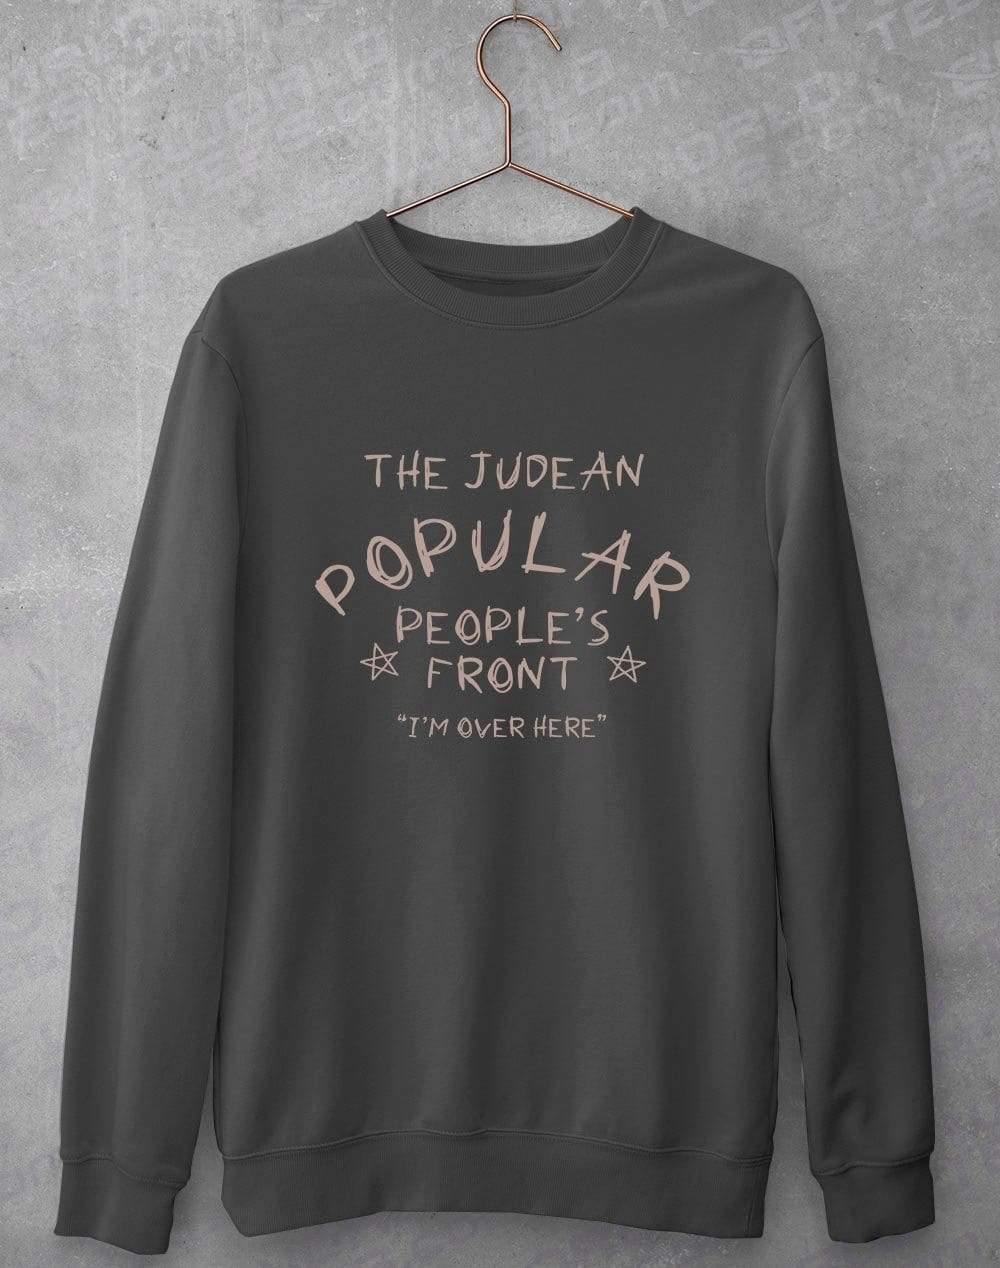 Judean Pupular Peoples Front Sweatshirt S / Charcoal  - Off World Tees